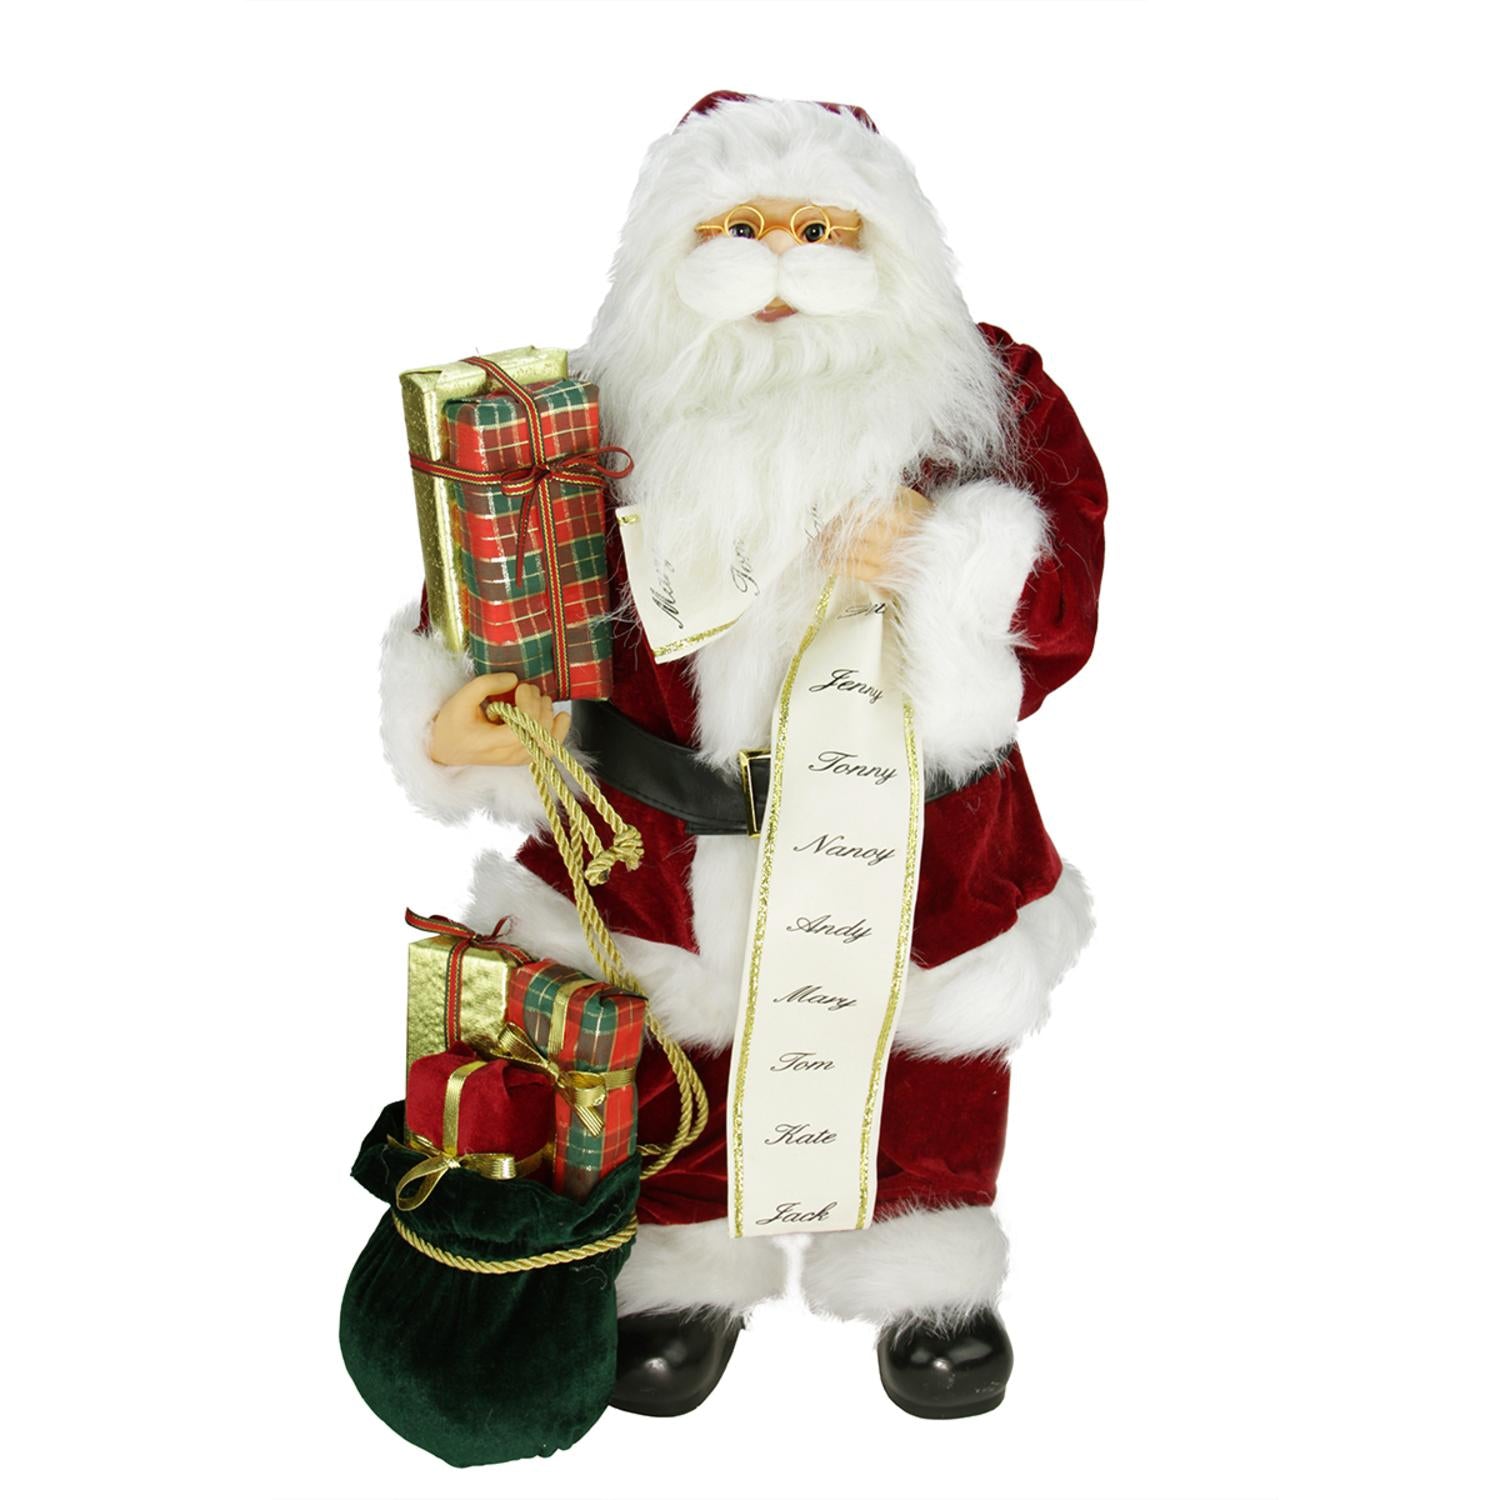 24" Traditional Standing Santa Claus Christmas Figure with Name List and Gift Bag